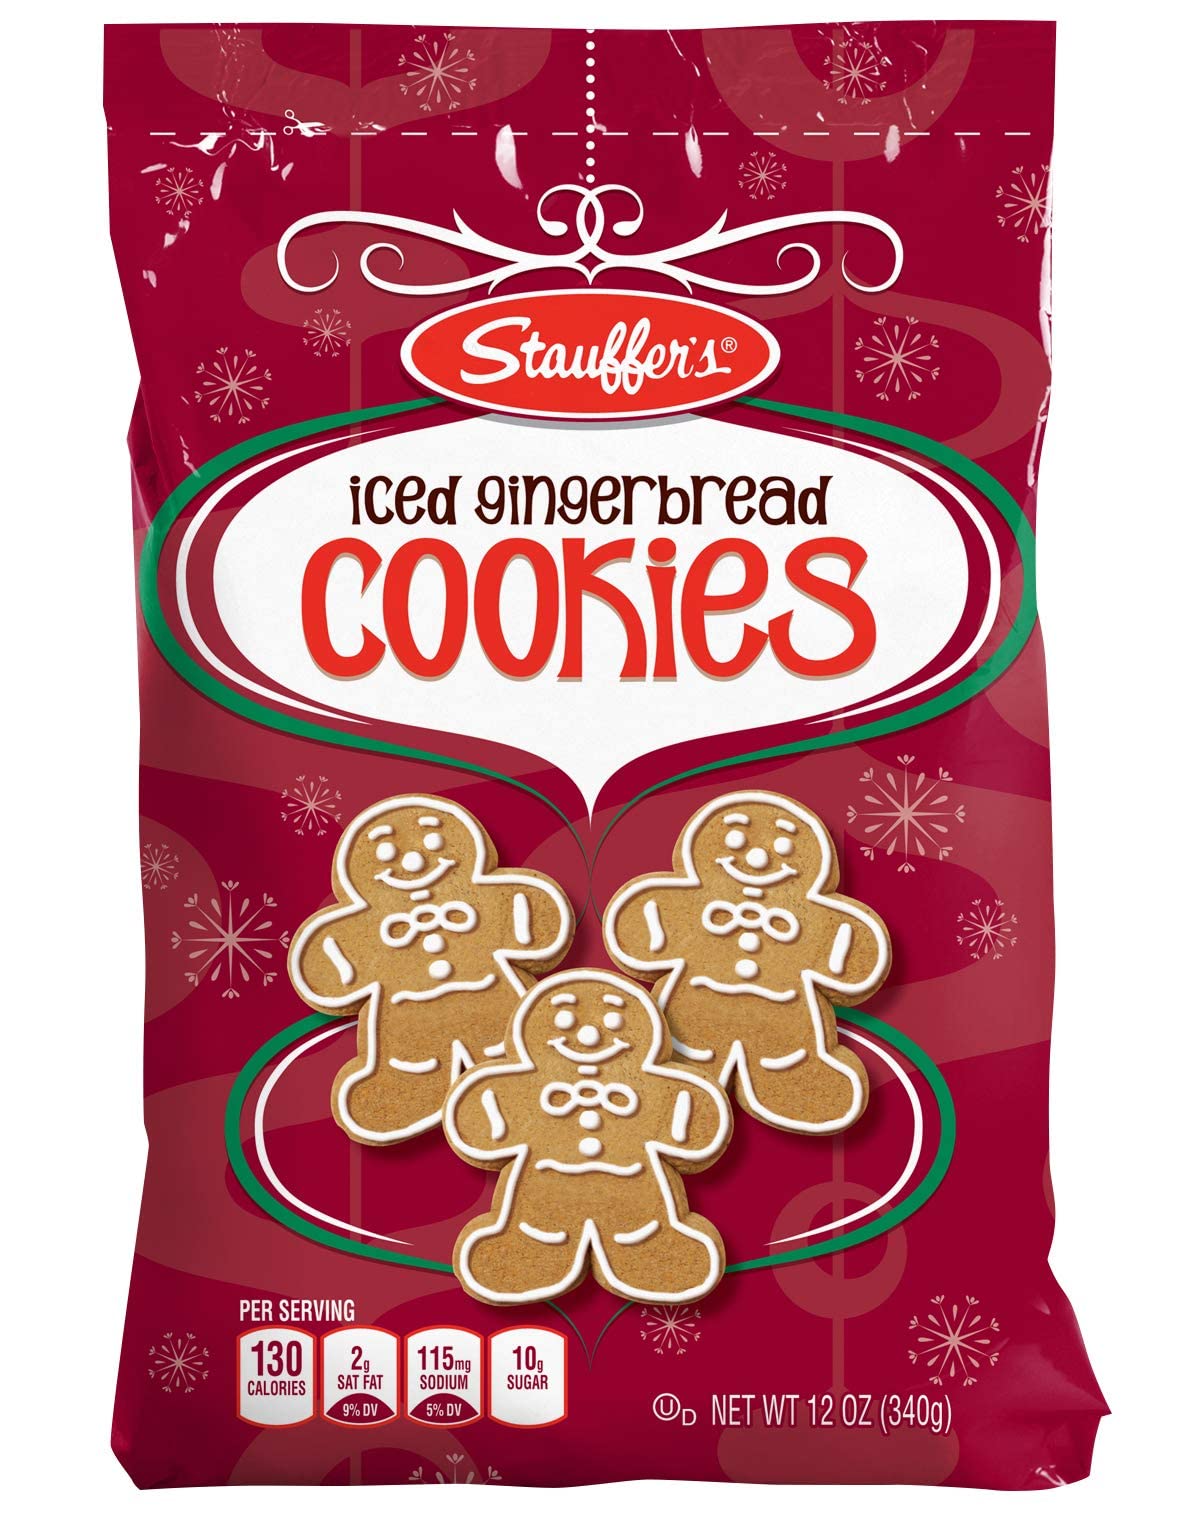 Stauffer’s Iced Gingerbread Cookies